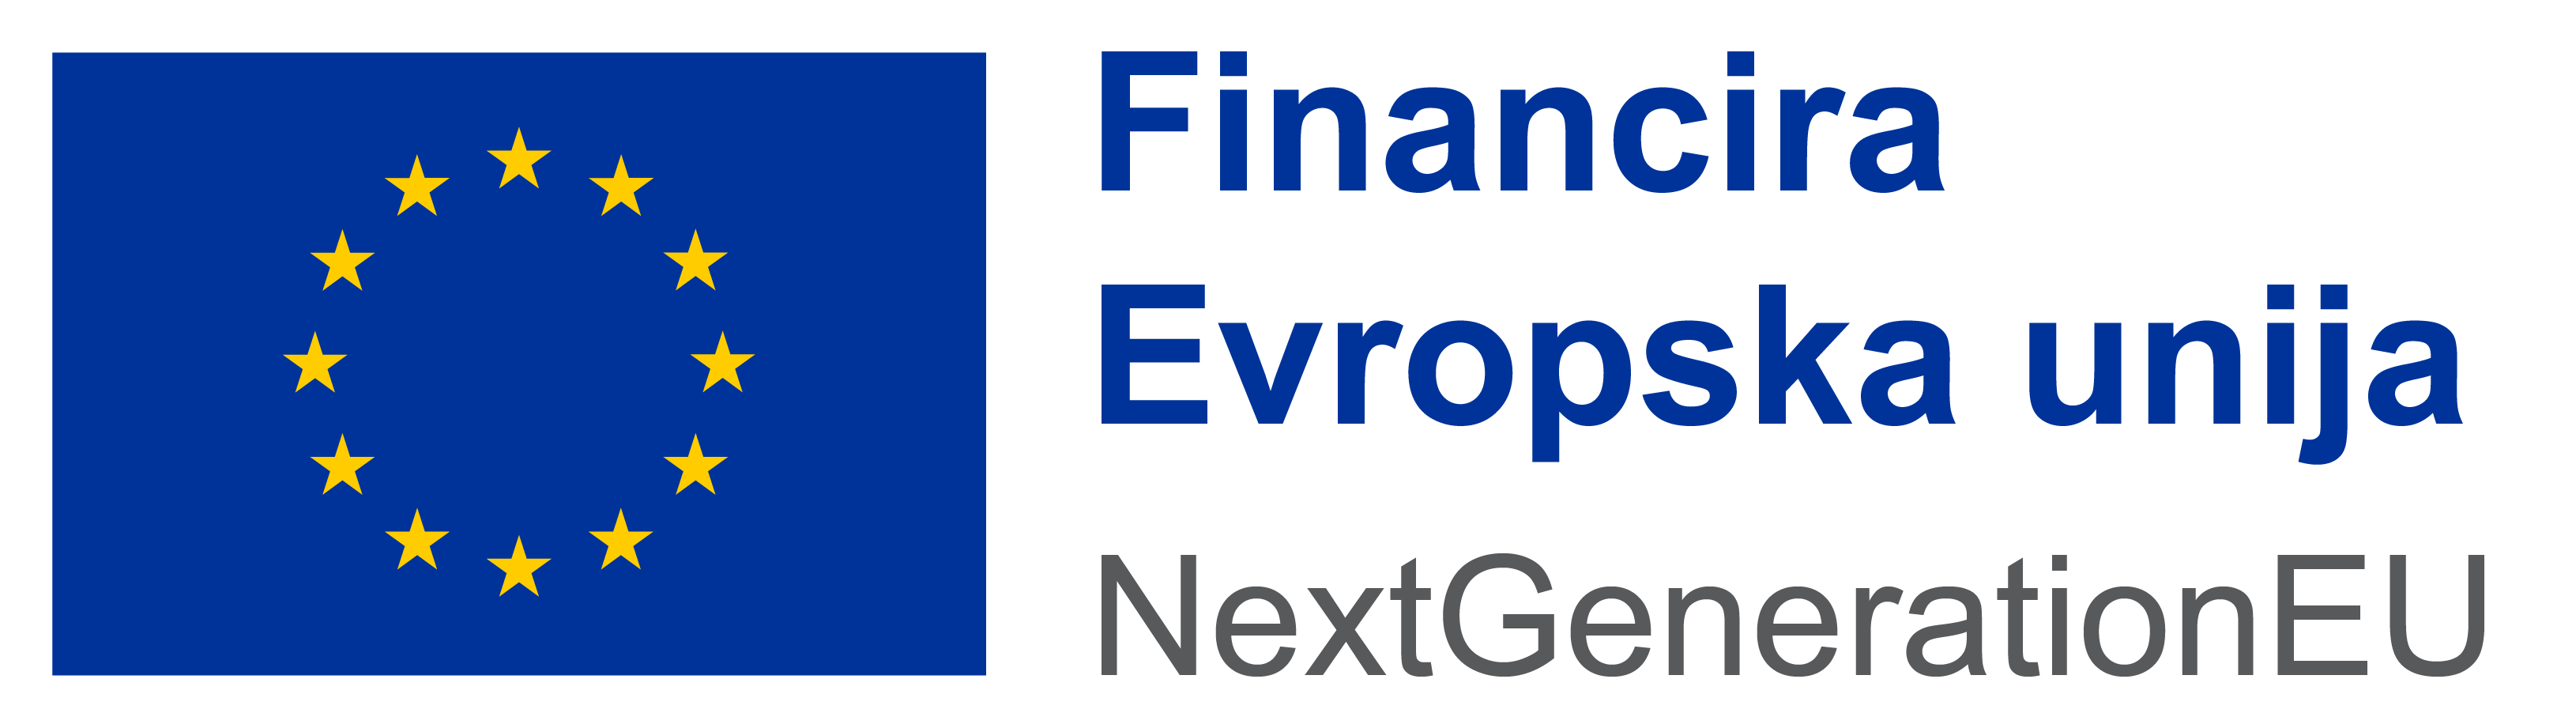 Logo: financira Evropska Unija